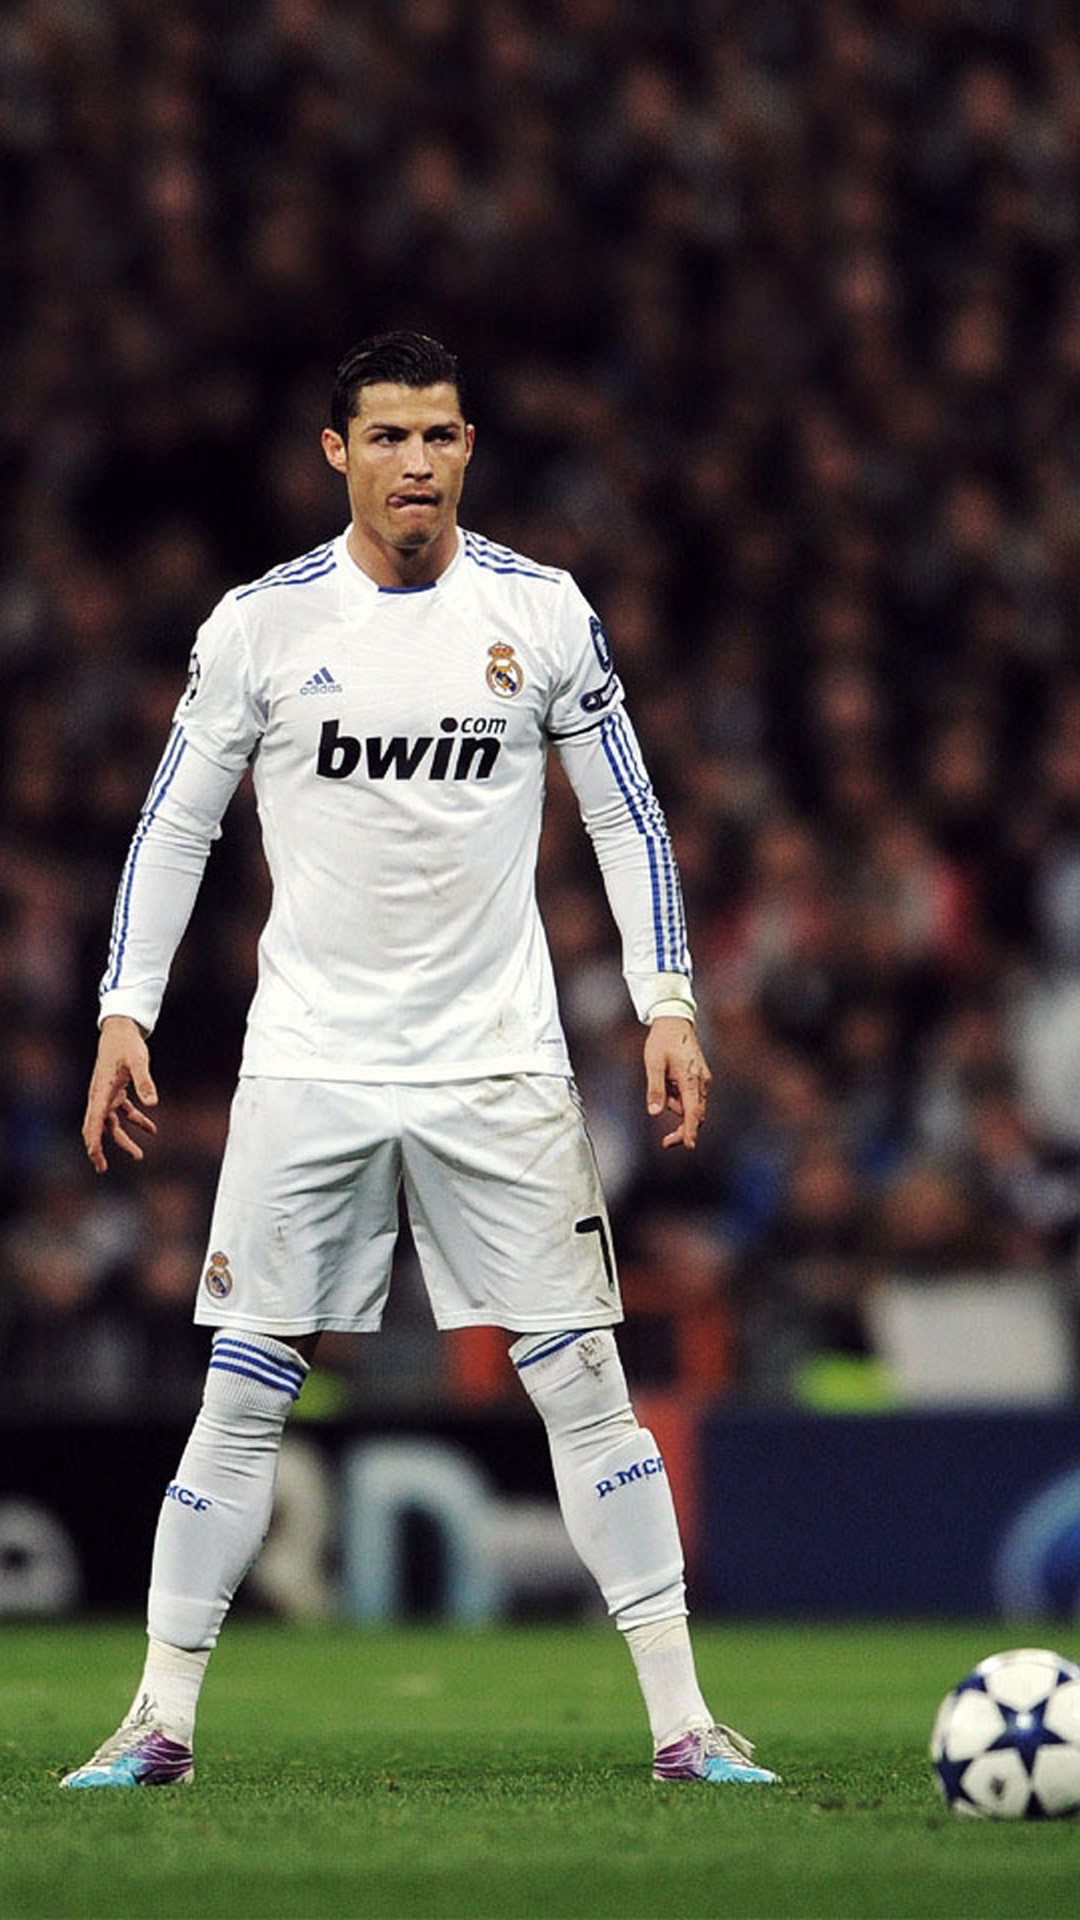 Cristiano Ronaldo Wallpaper For iPhone Image